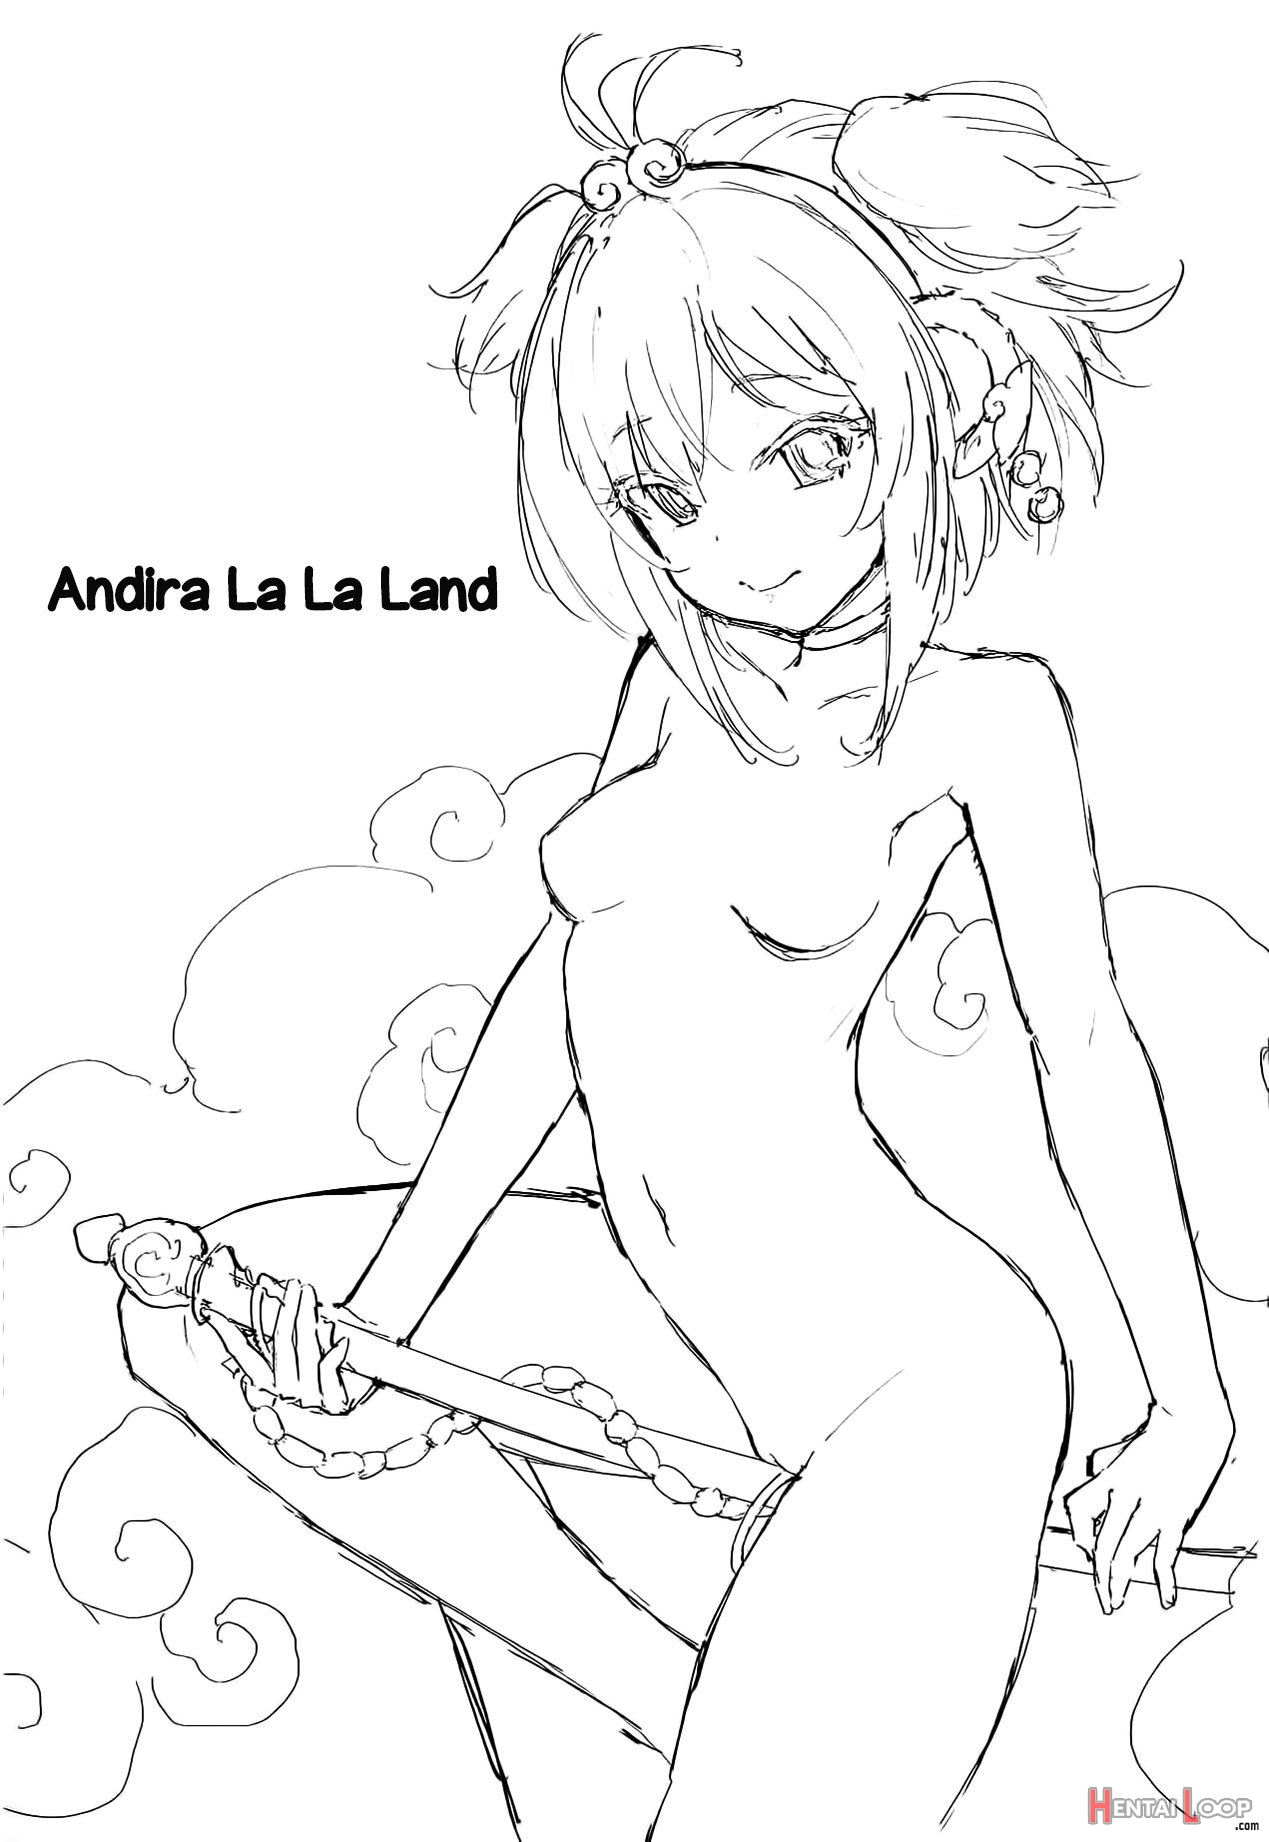 Andira La La Land page 2